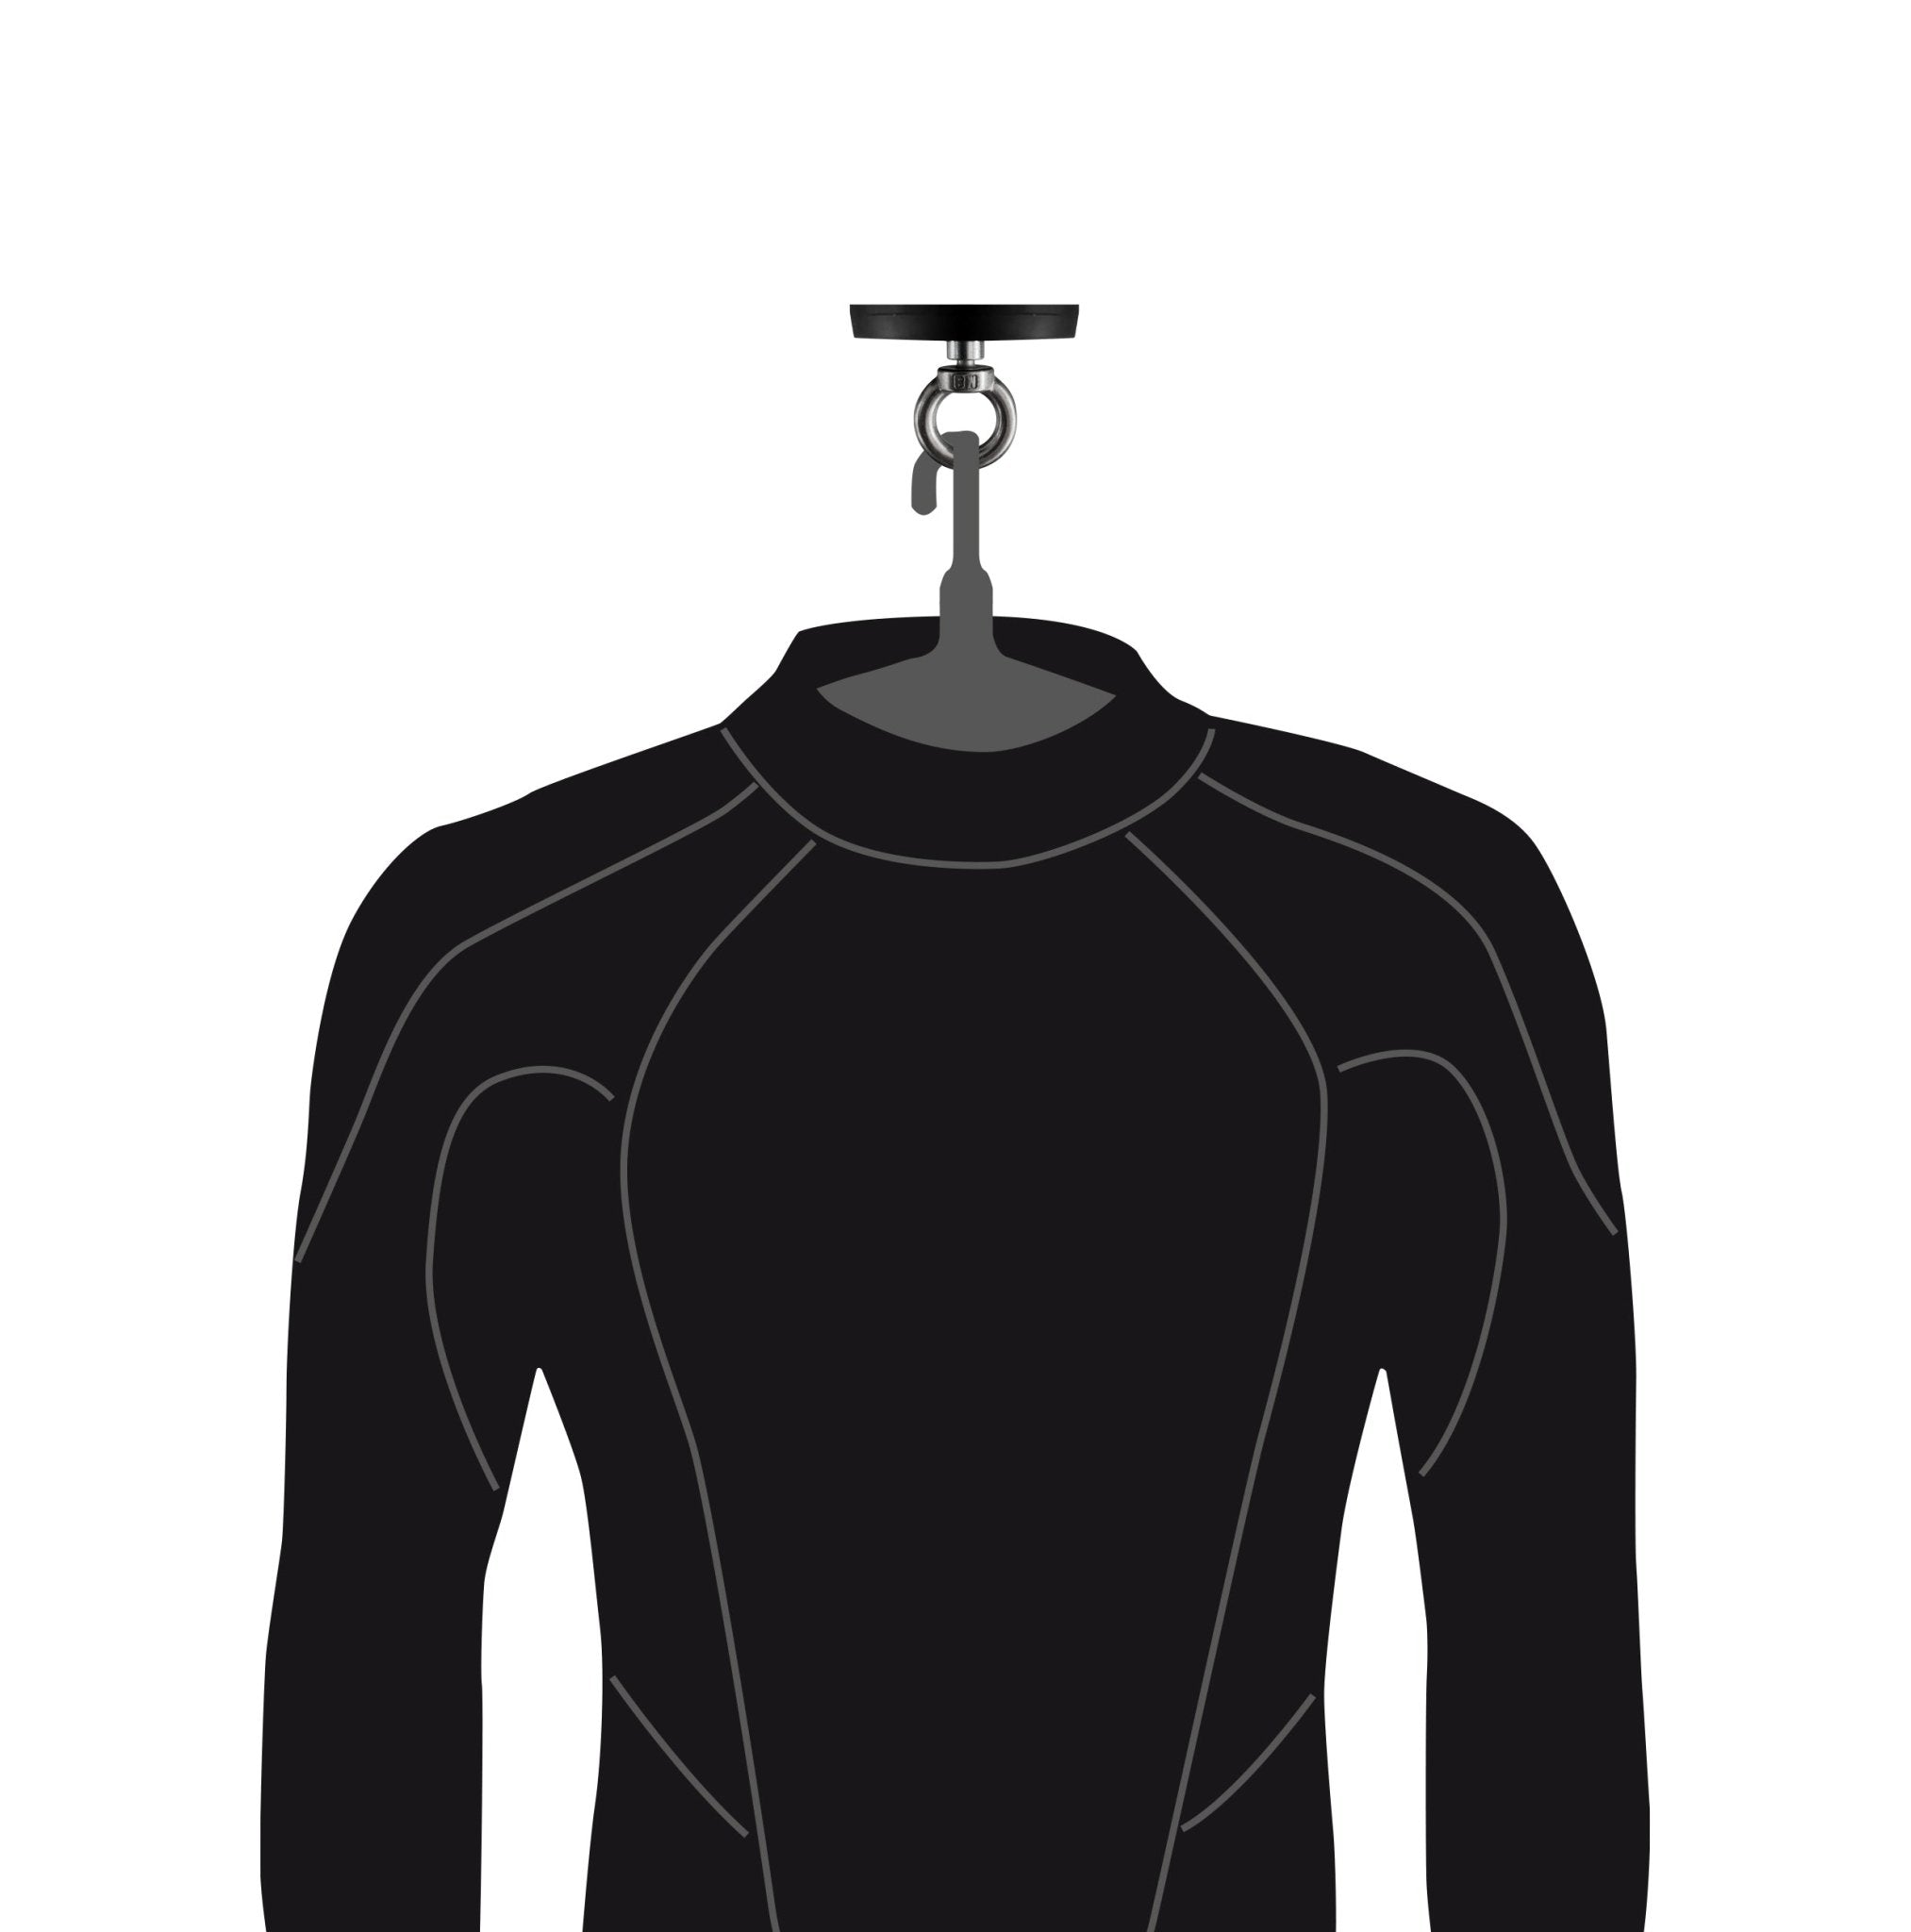 Surflogic Magnetic Wetsuit Hook - Worthing Watersports - 59194 - Surflogic